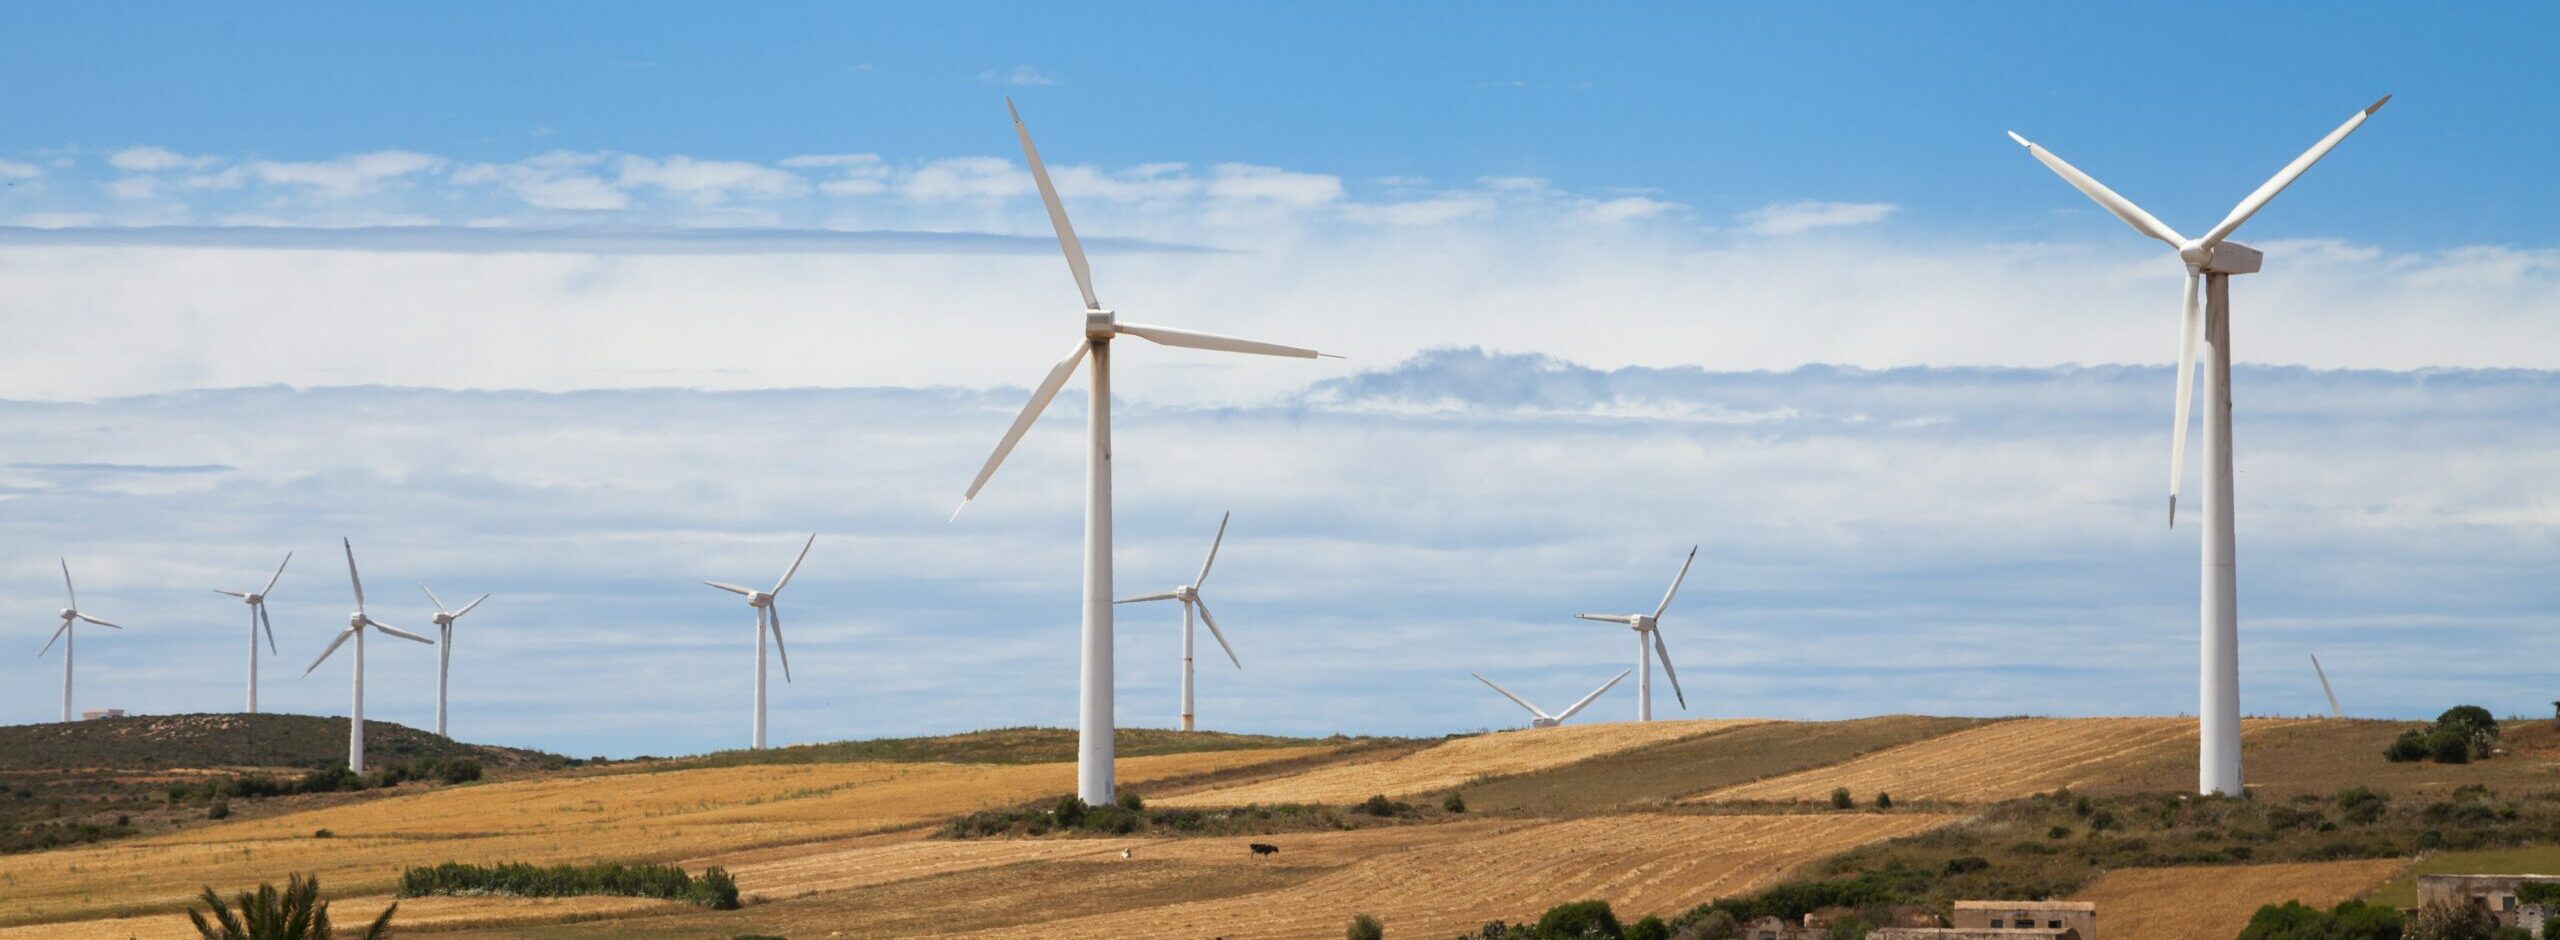 European wind energy developers